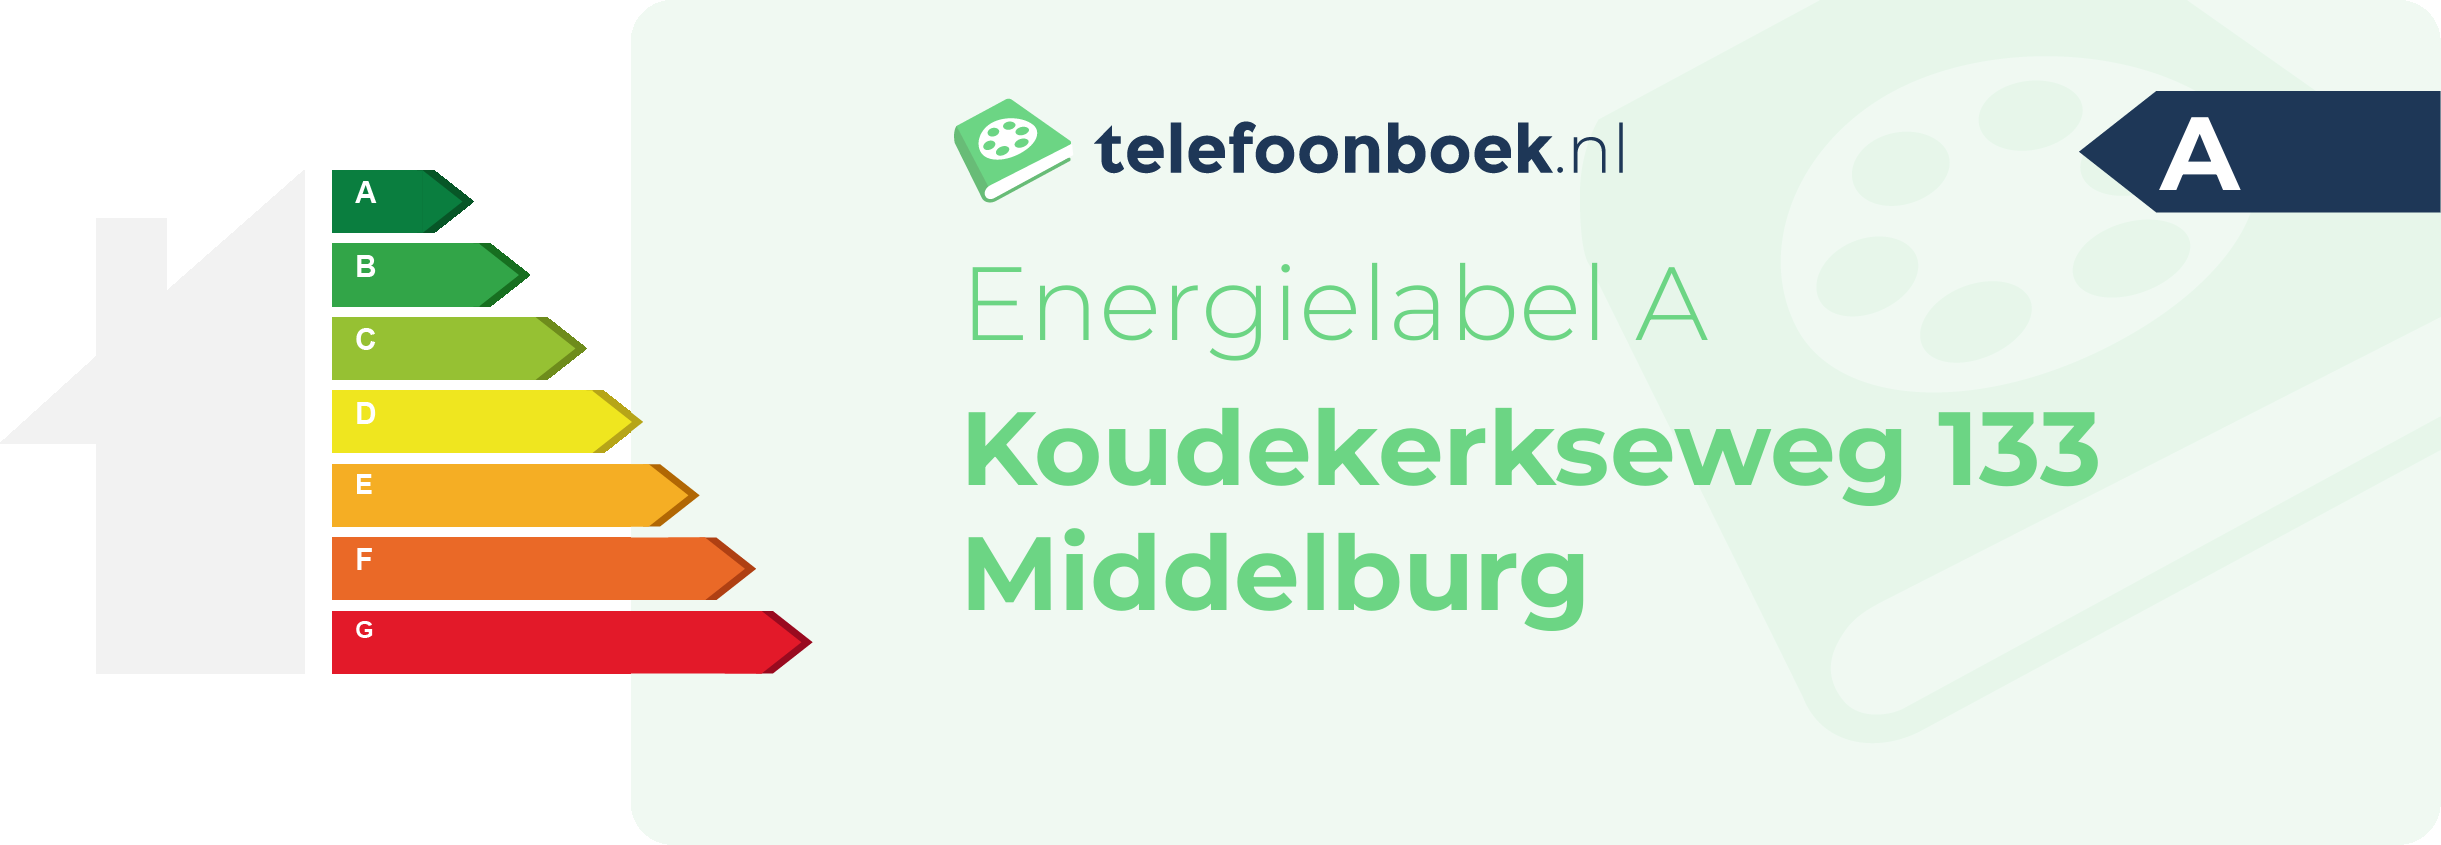 Energielabel Koudekerkseweg 133 Middelburg